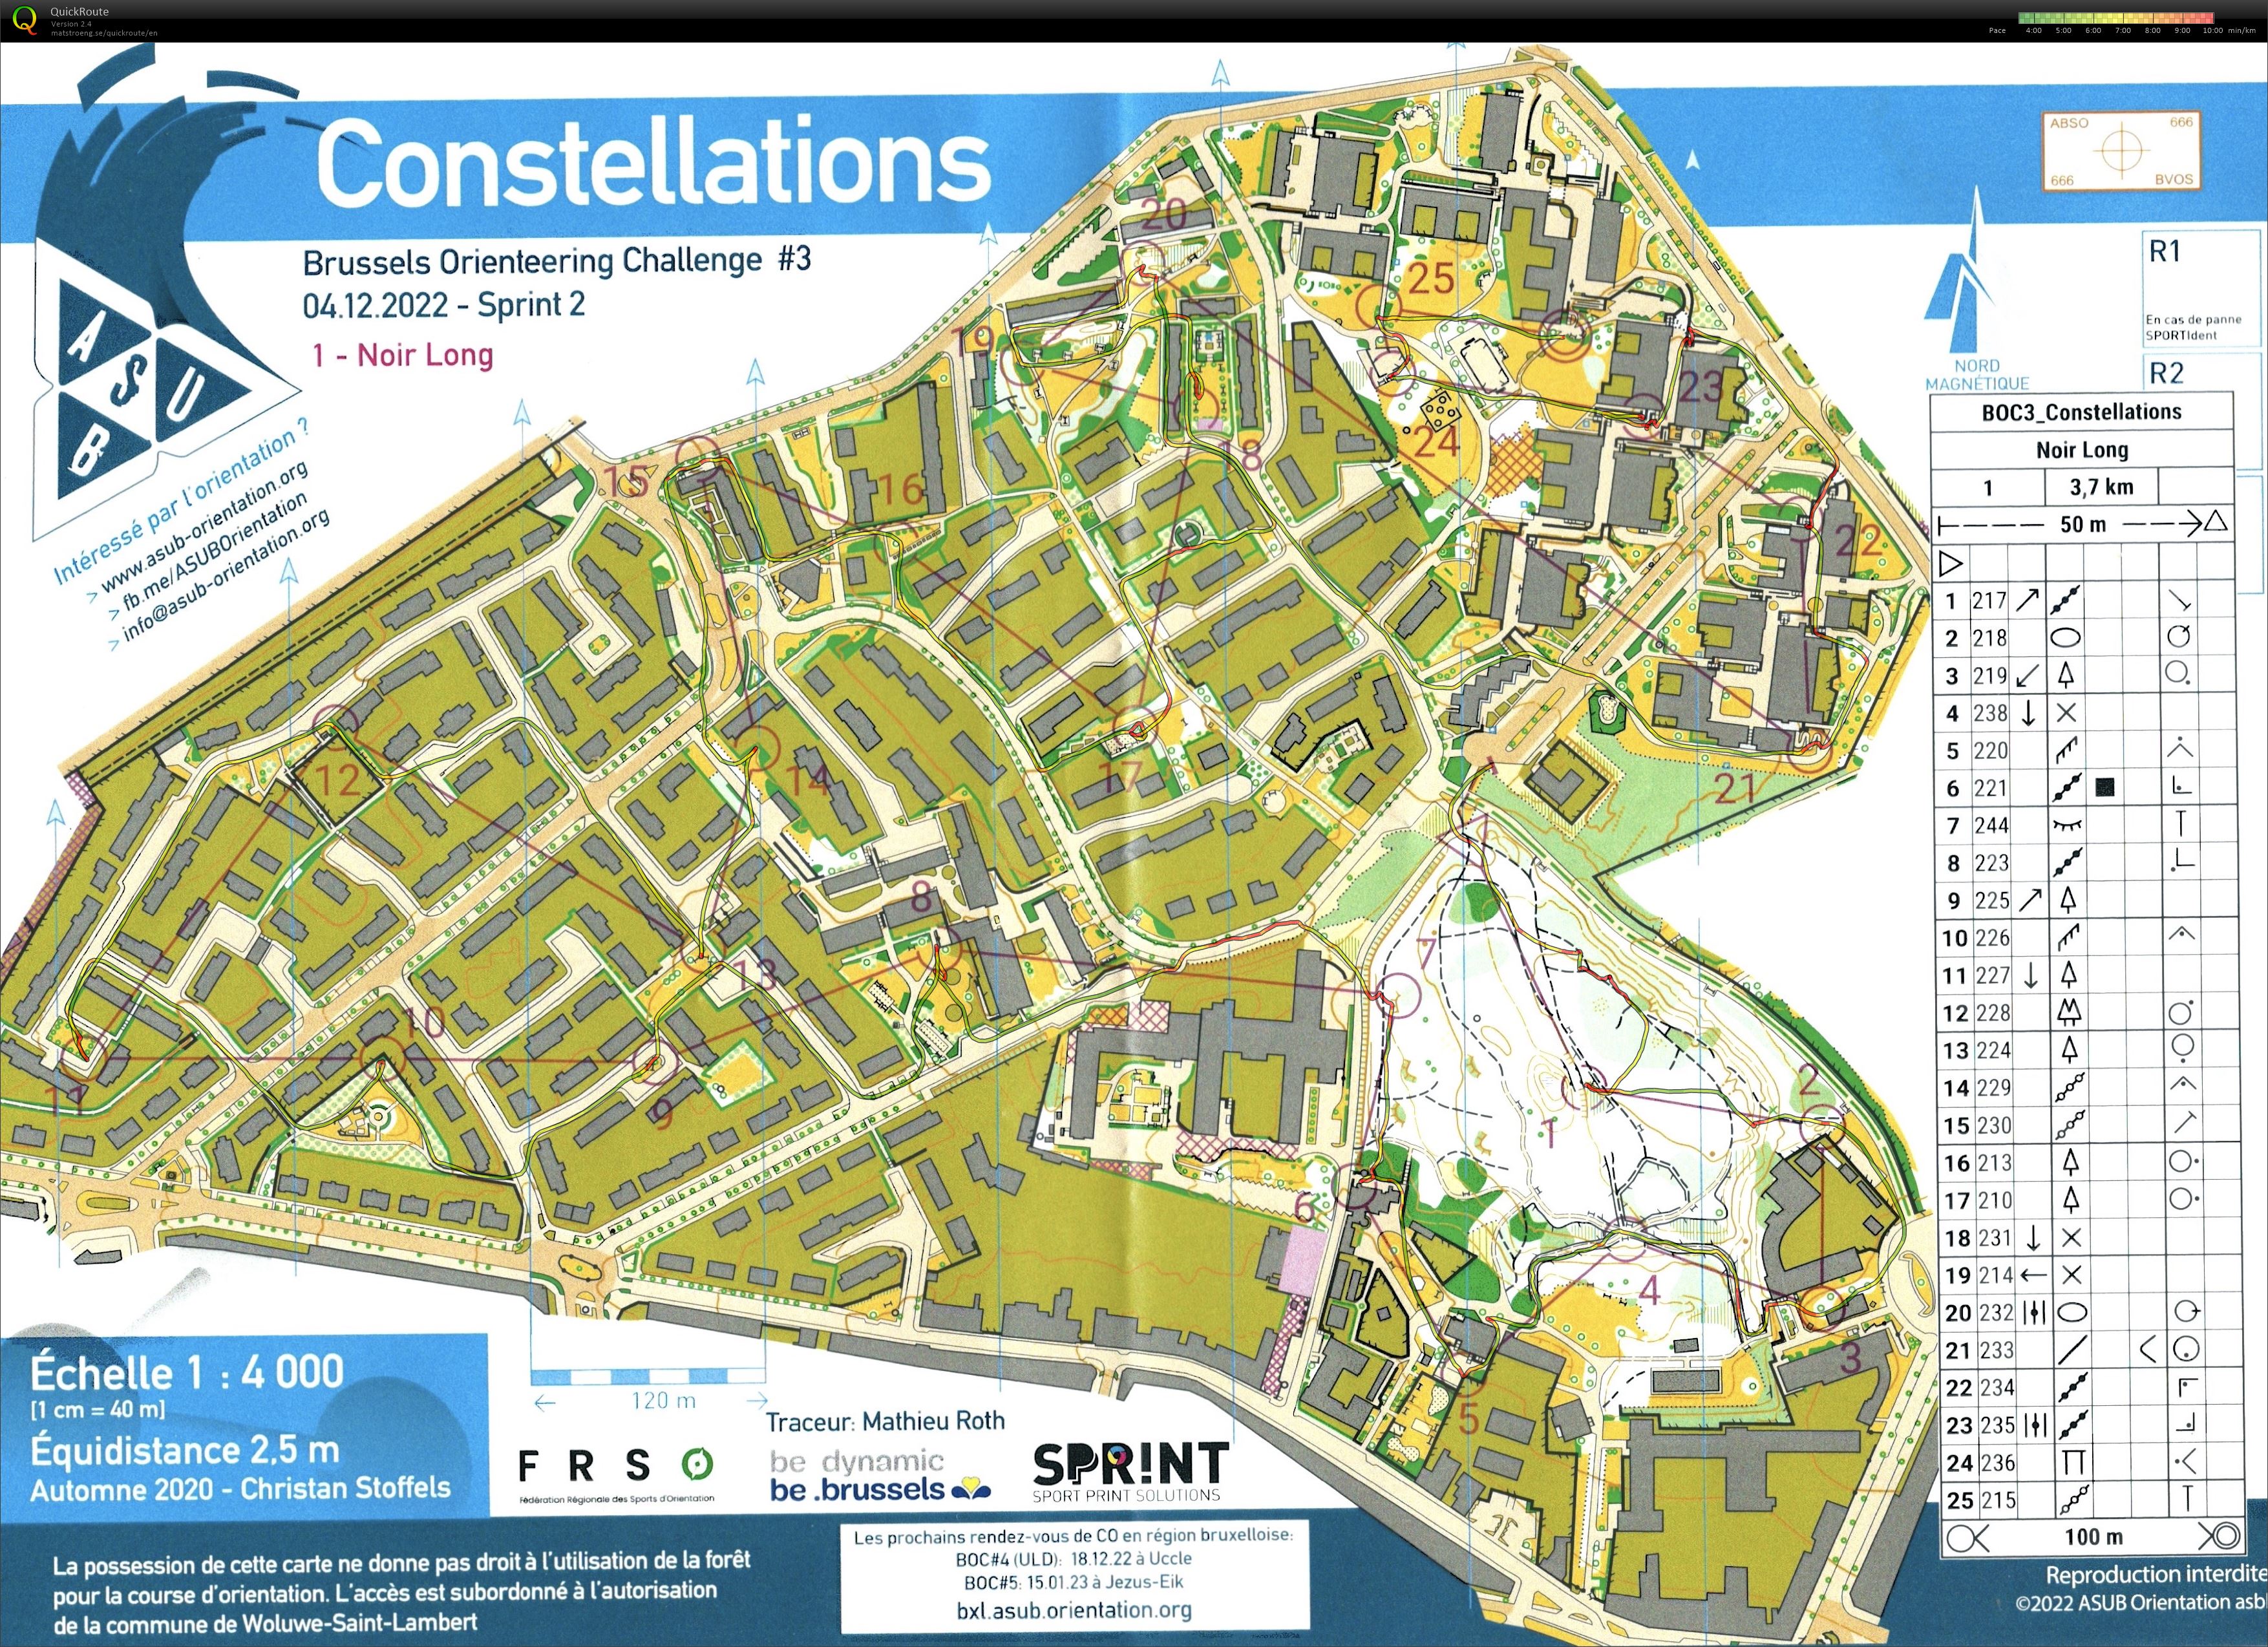 Brussels Orienteering Challenge #3 - Sprint 2 - Constellations (04-12-2022)